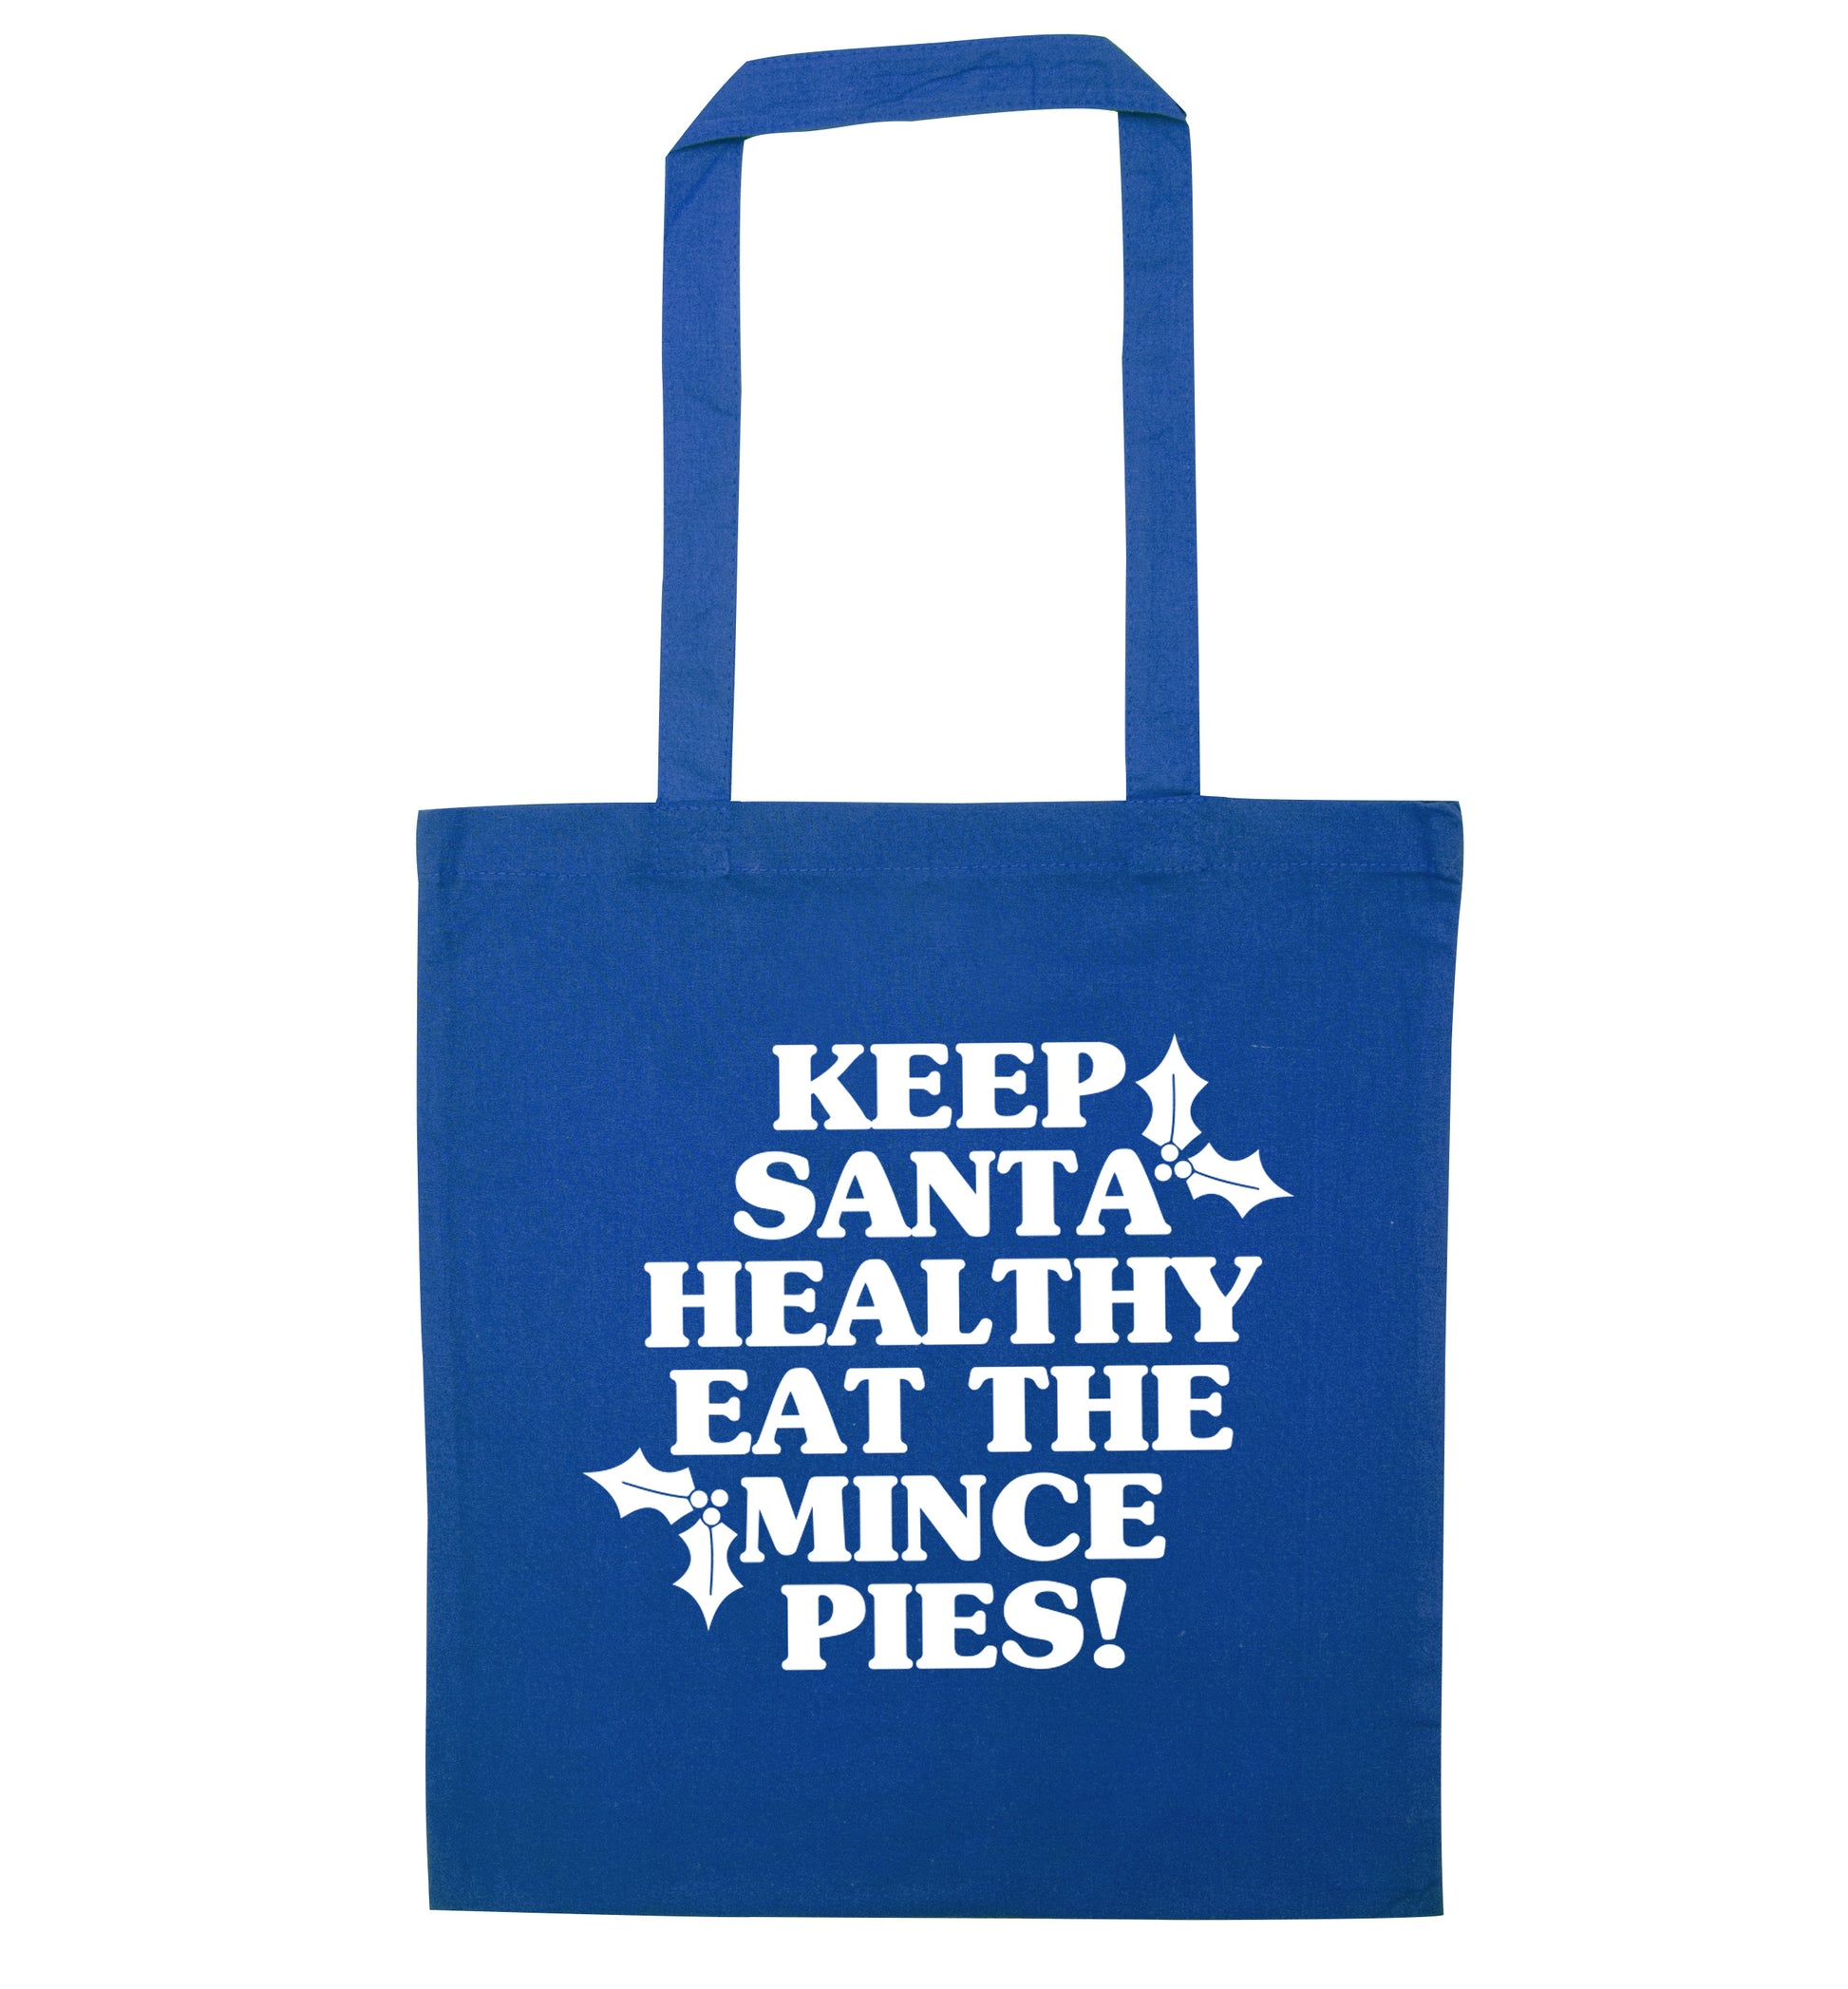 Keep santa healthy eat the mince pies blue tote bag